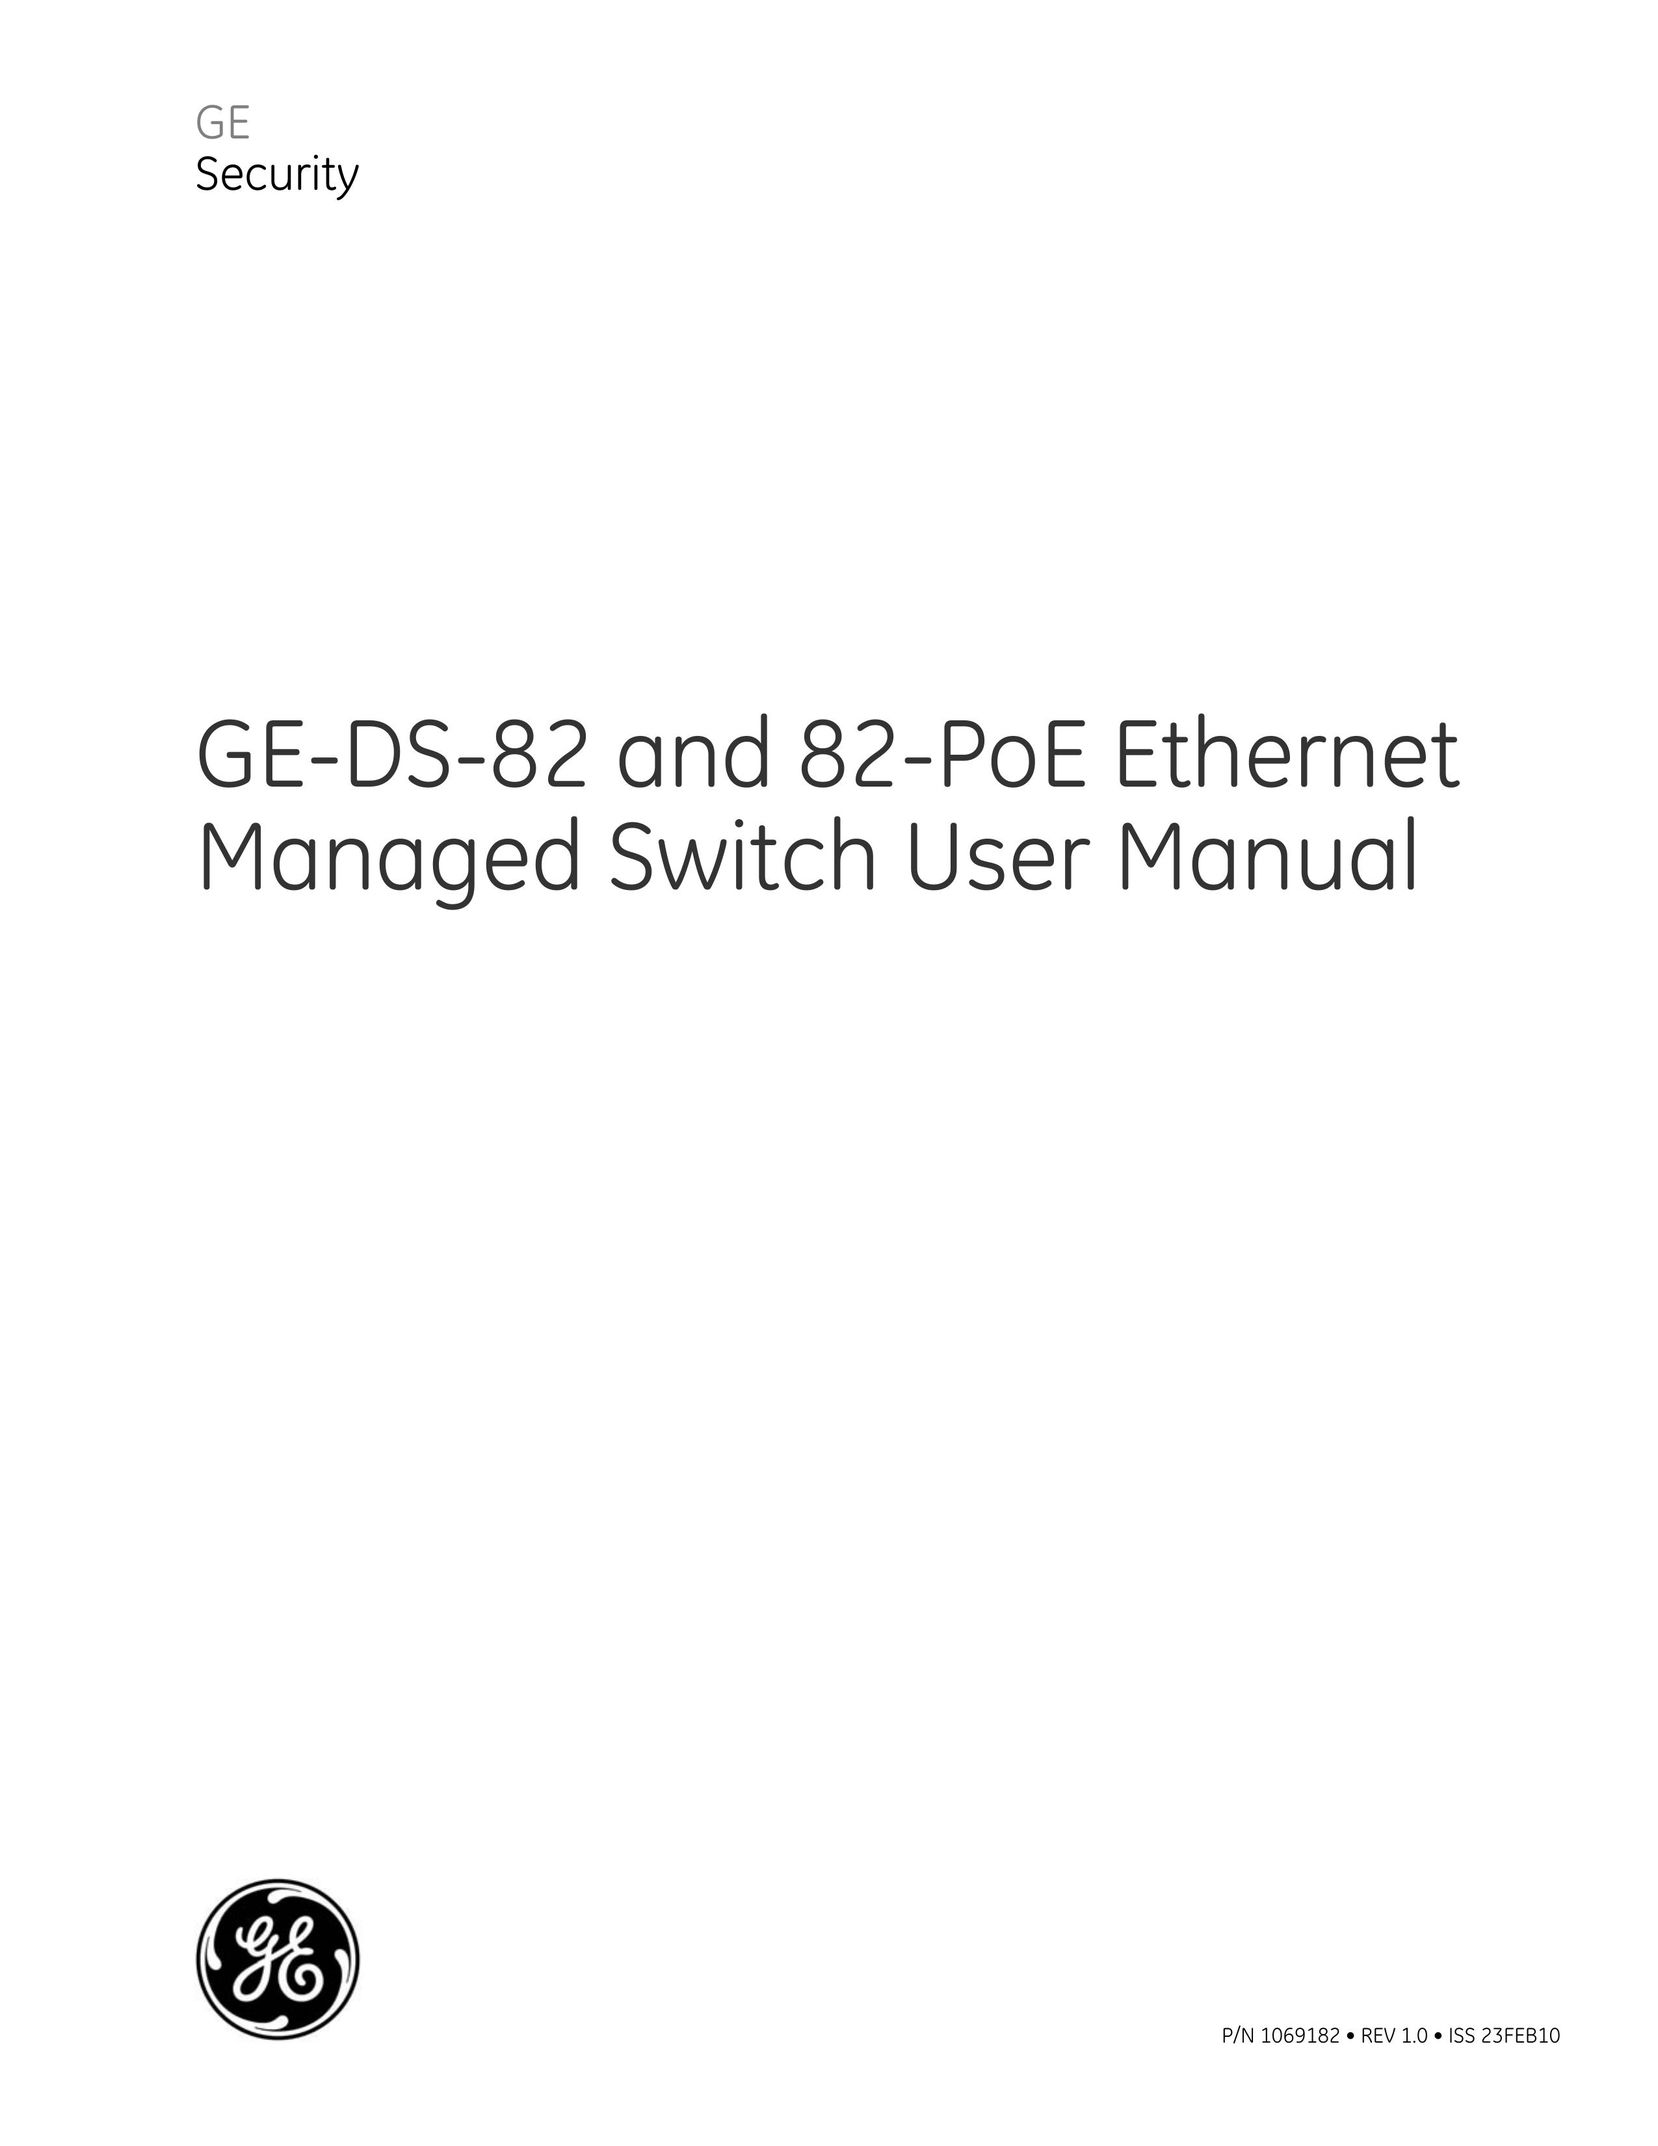 GE 82-POE Switch User Manual